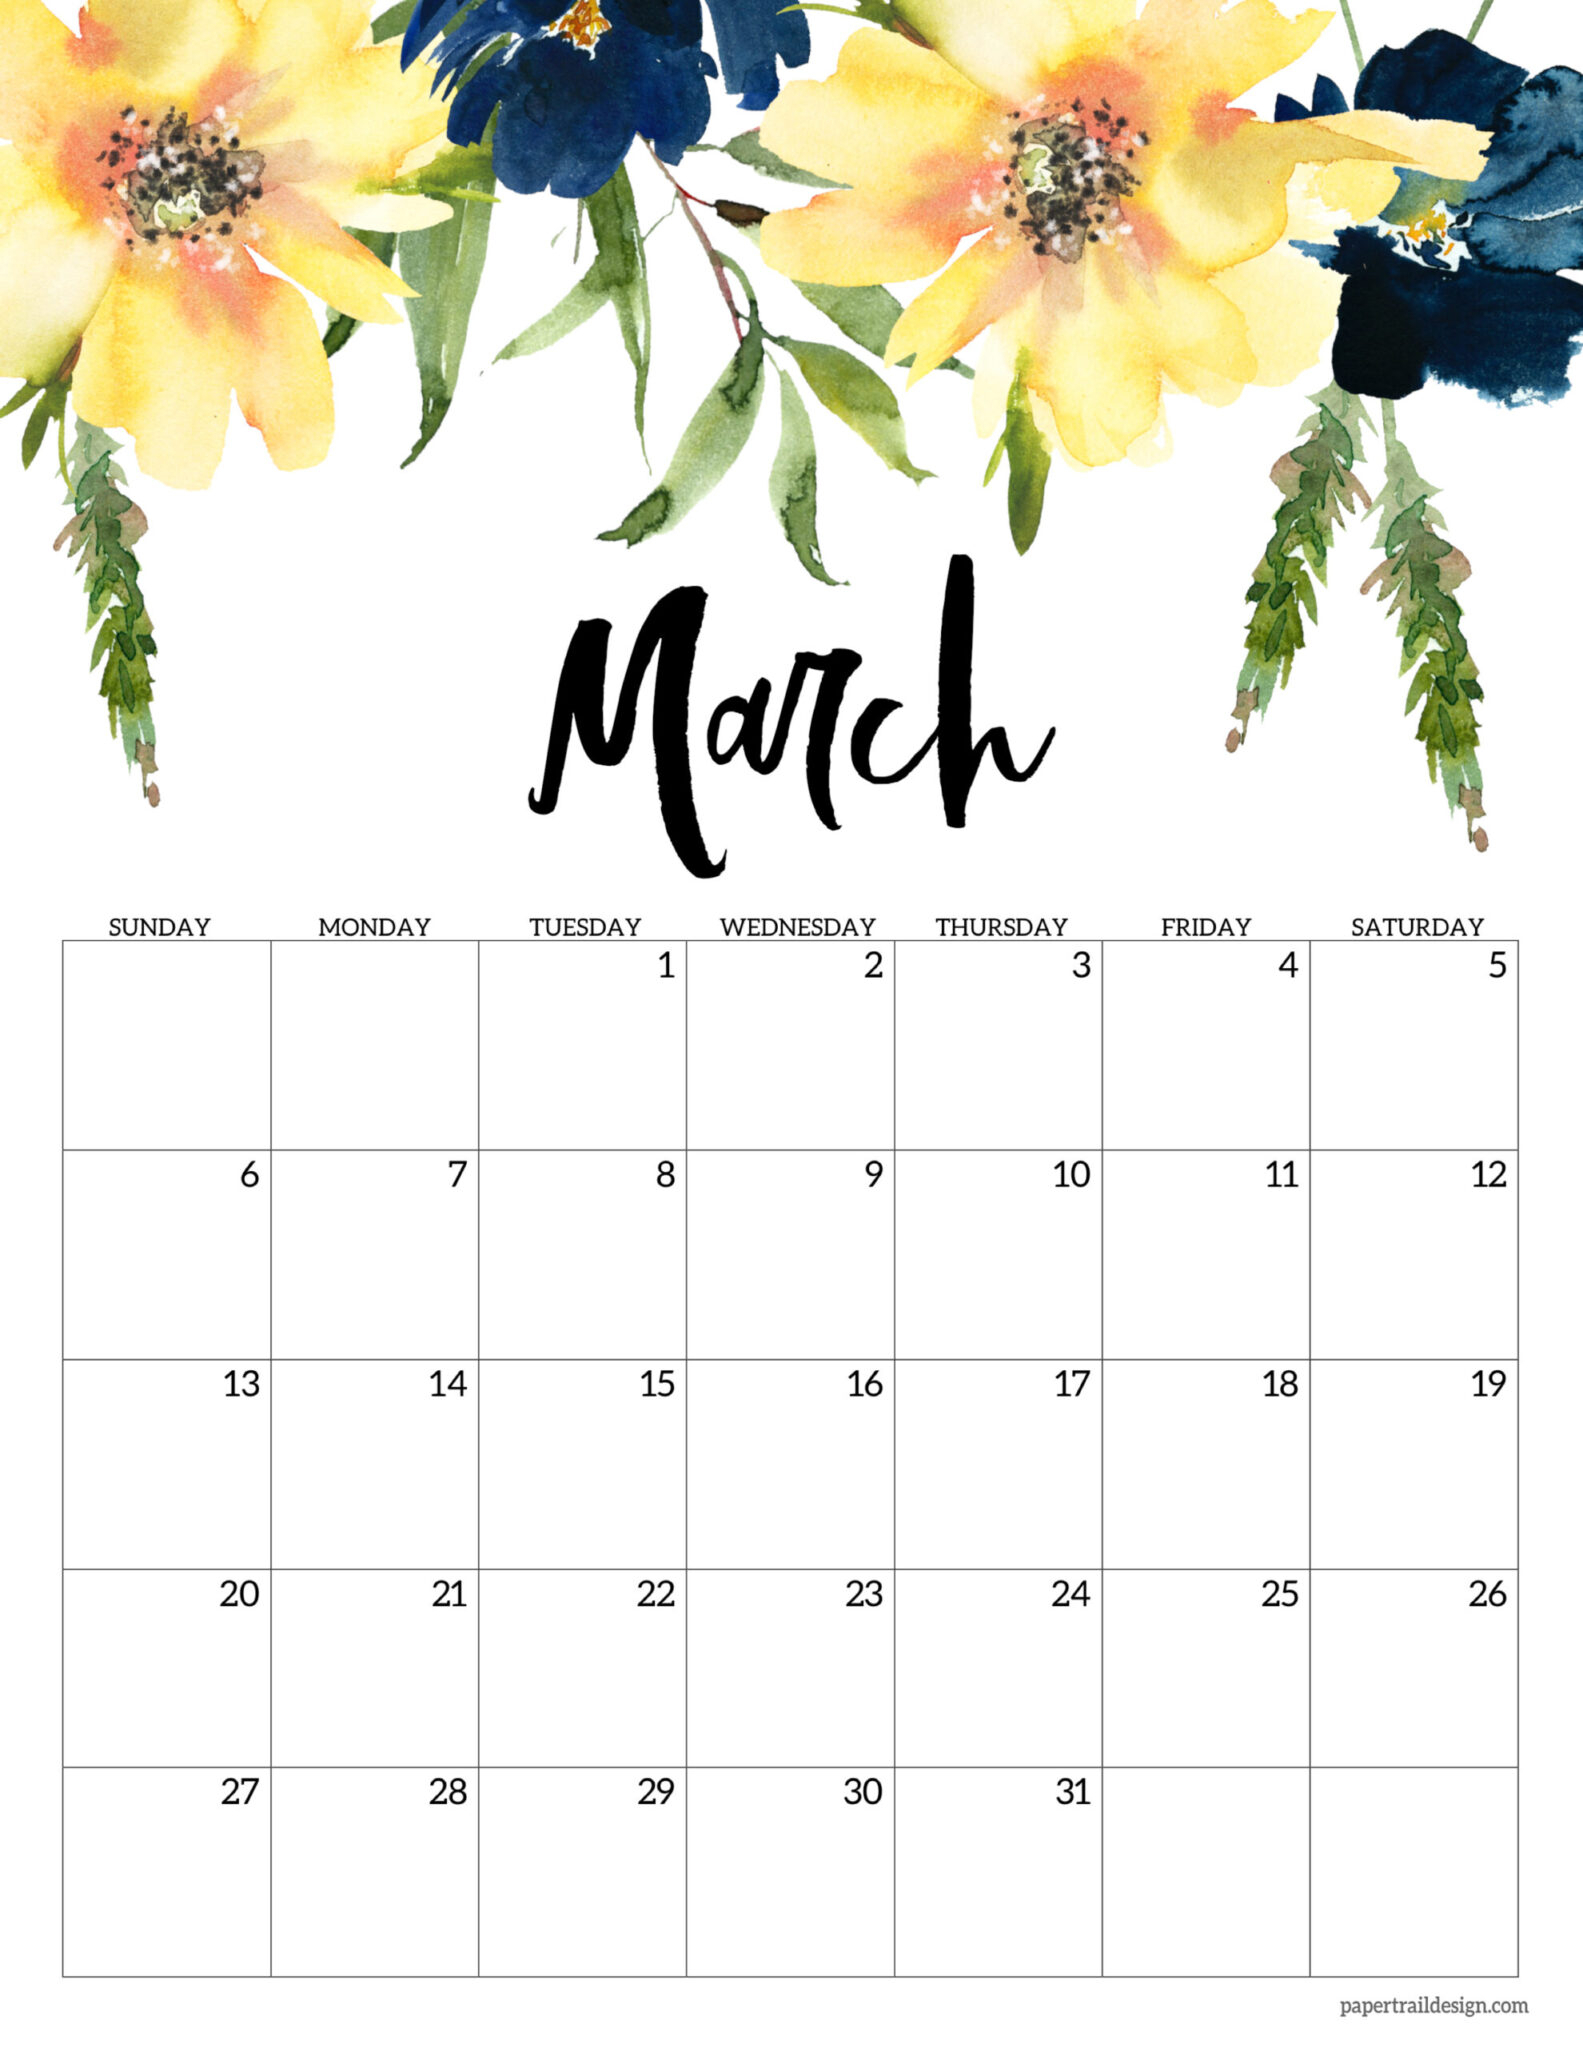 Free 2022 Calendar Printable  Floral  Paper Trail Design inside Free Landscape Architecture Calendar